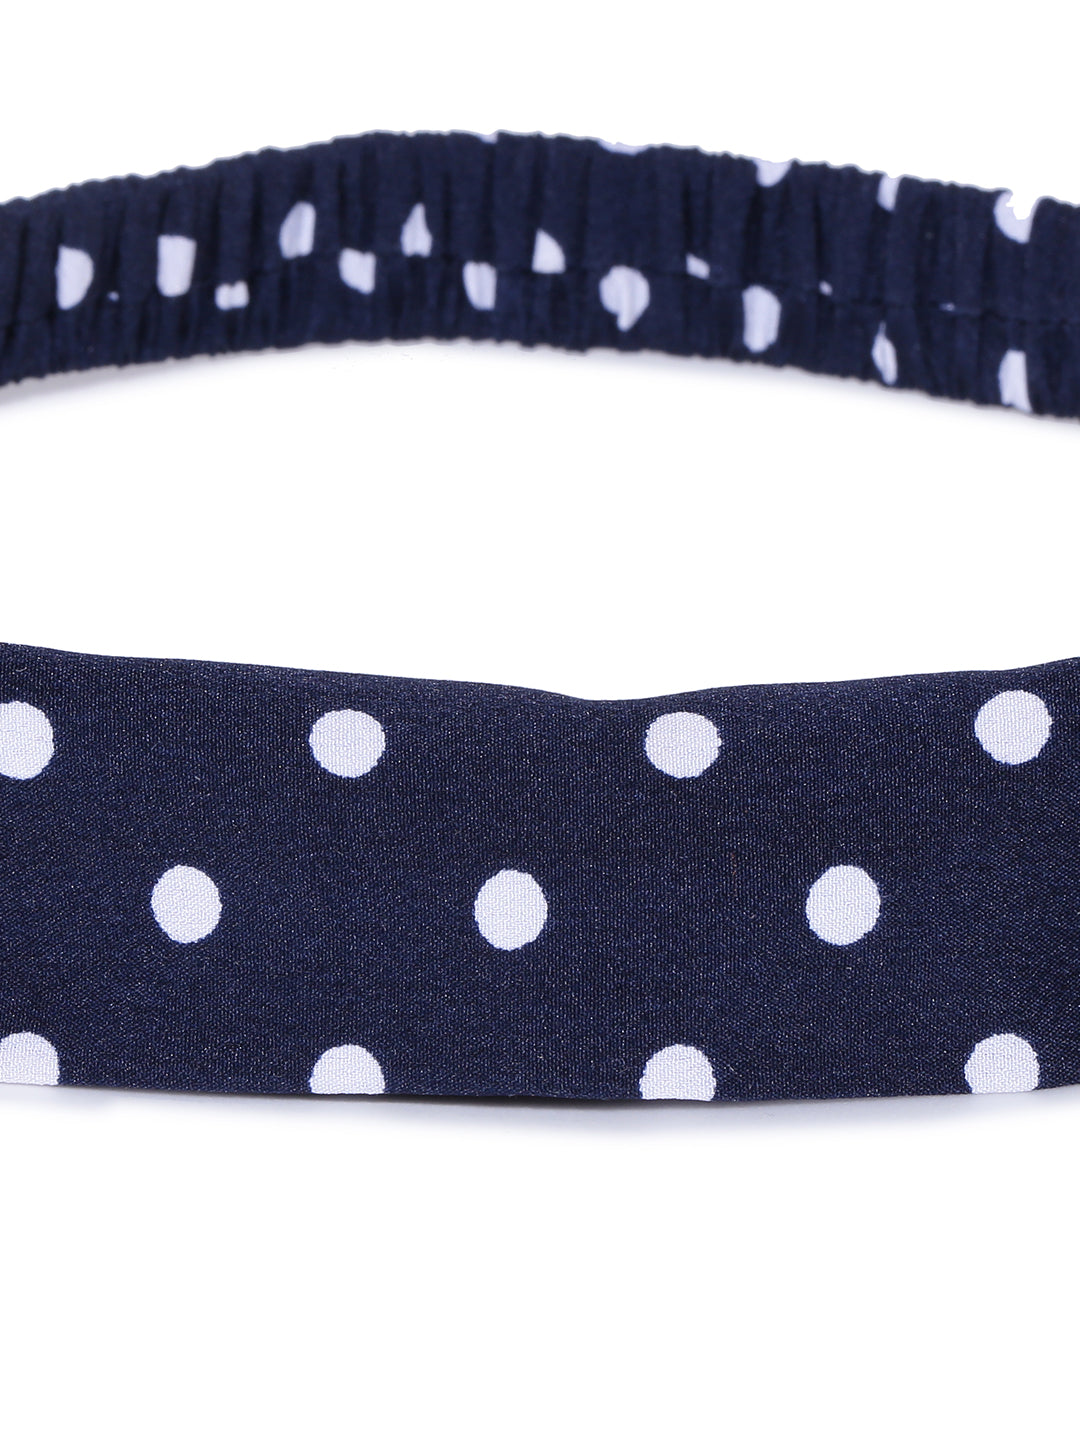 Blueberry navy blue polka dot hair band